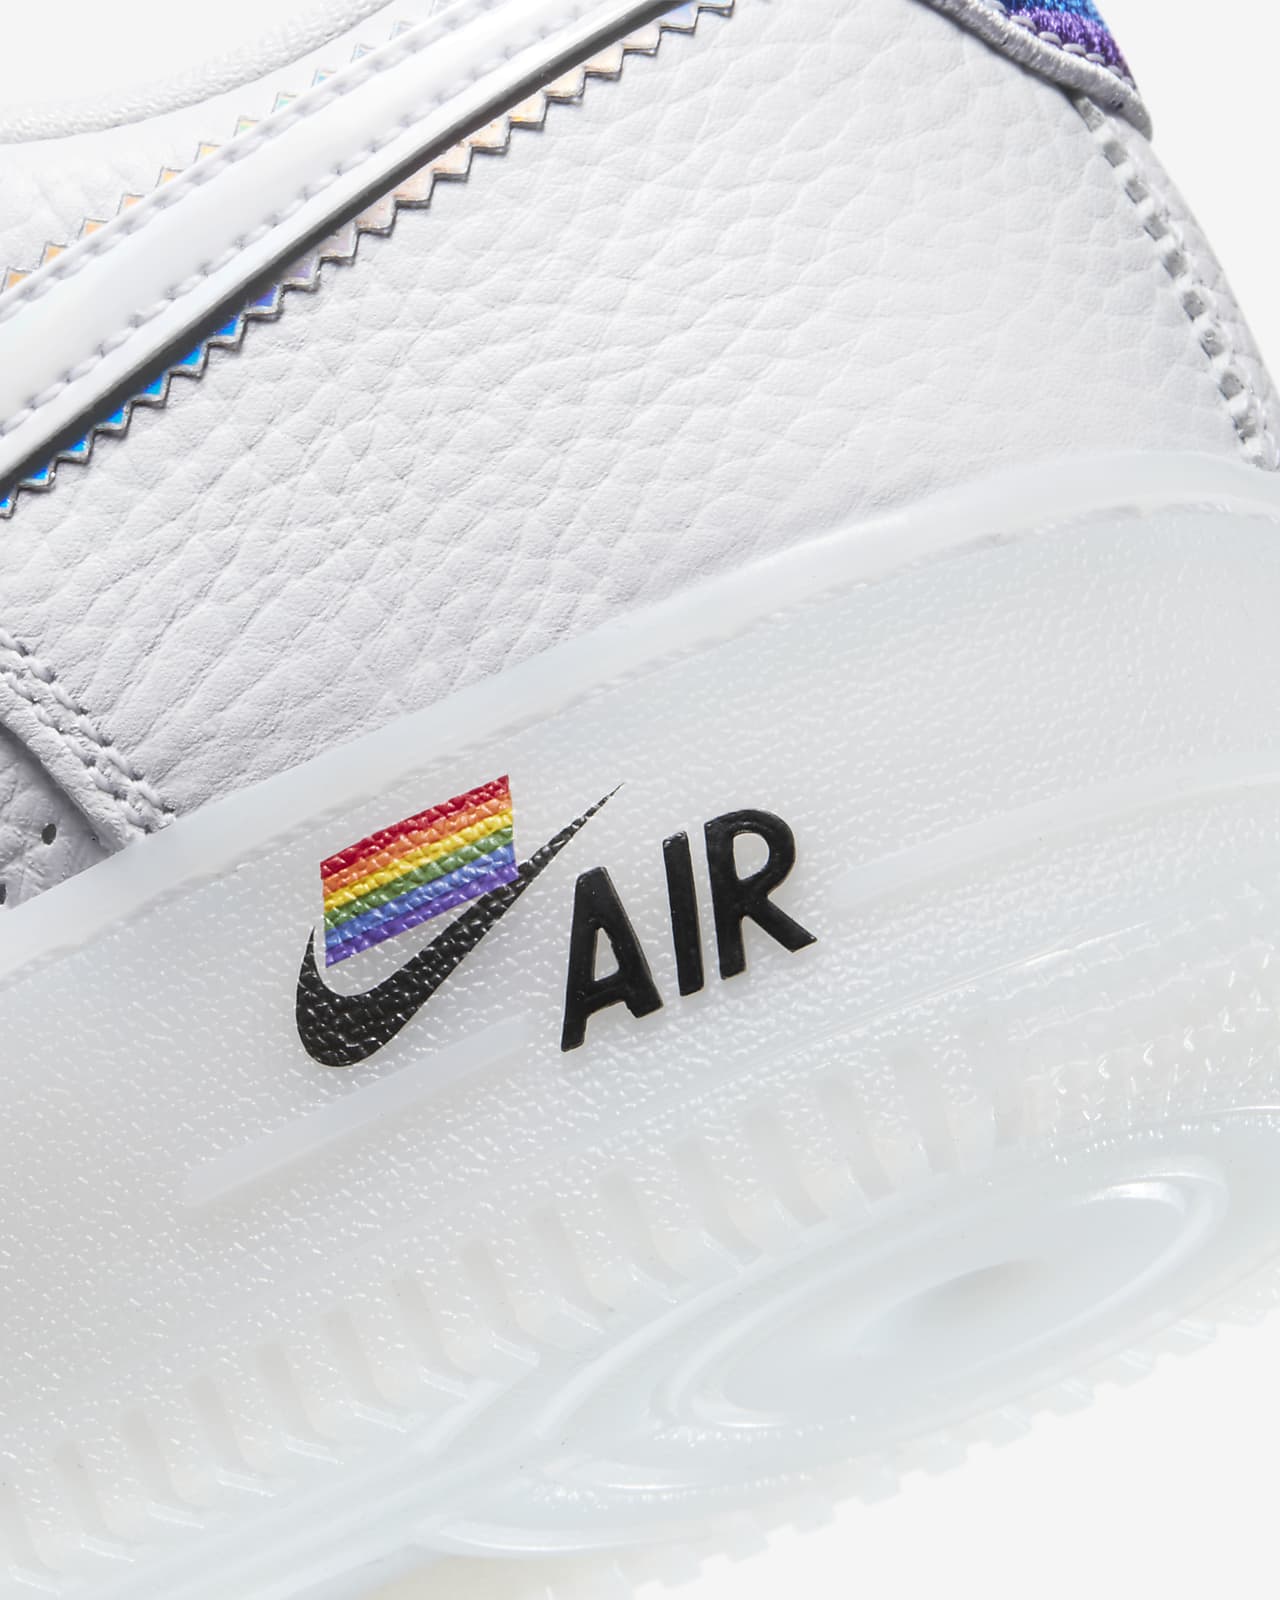 Nike Air Force 1 BETRUE Men's Shoe. Nike ZA